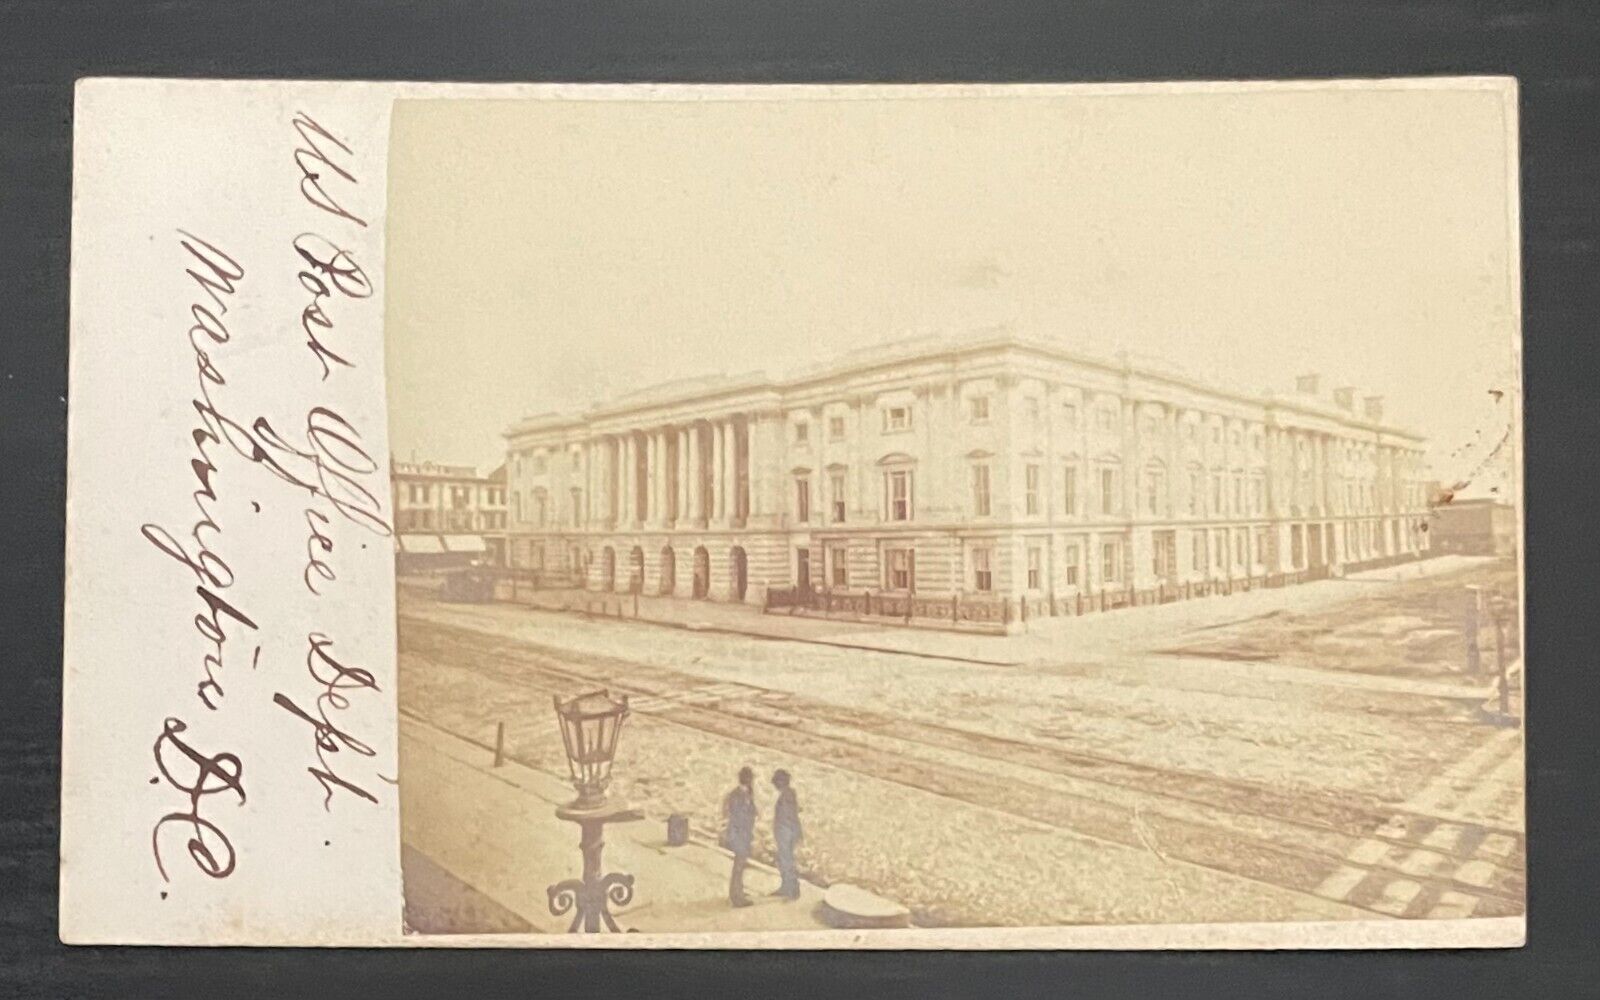 UNITED STATES POST OFFICE BUILDING WASHINGTON D.C. - 1860s ORIGINAL CDV PHOTO